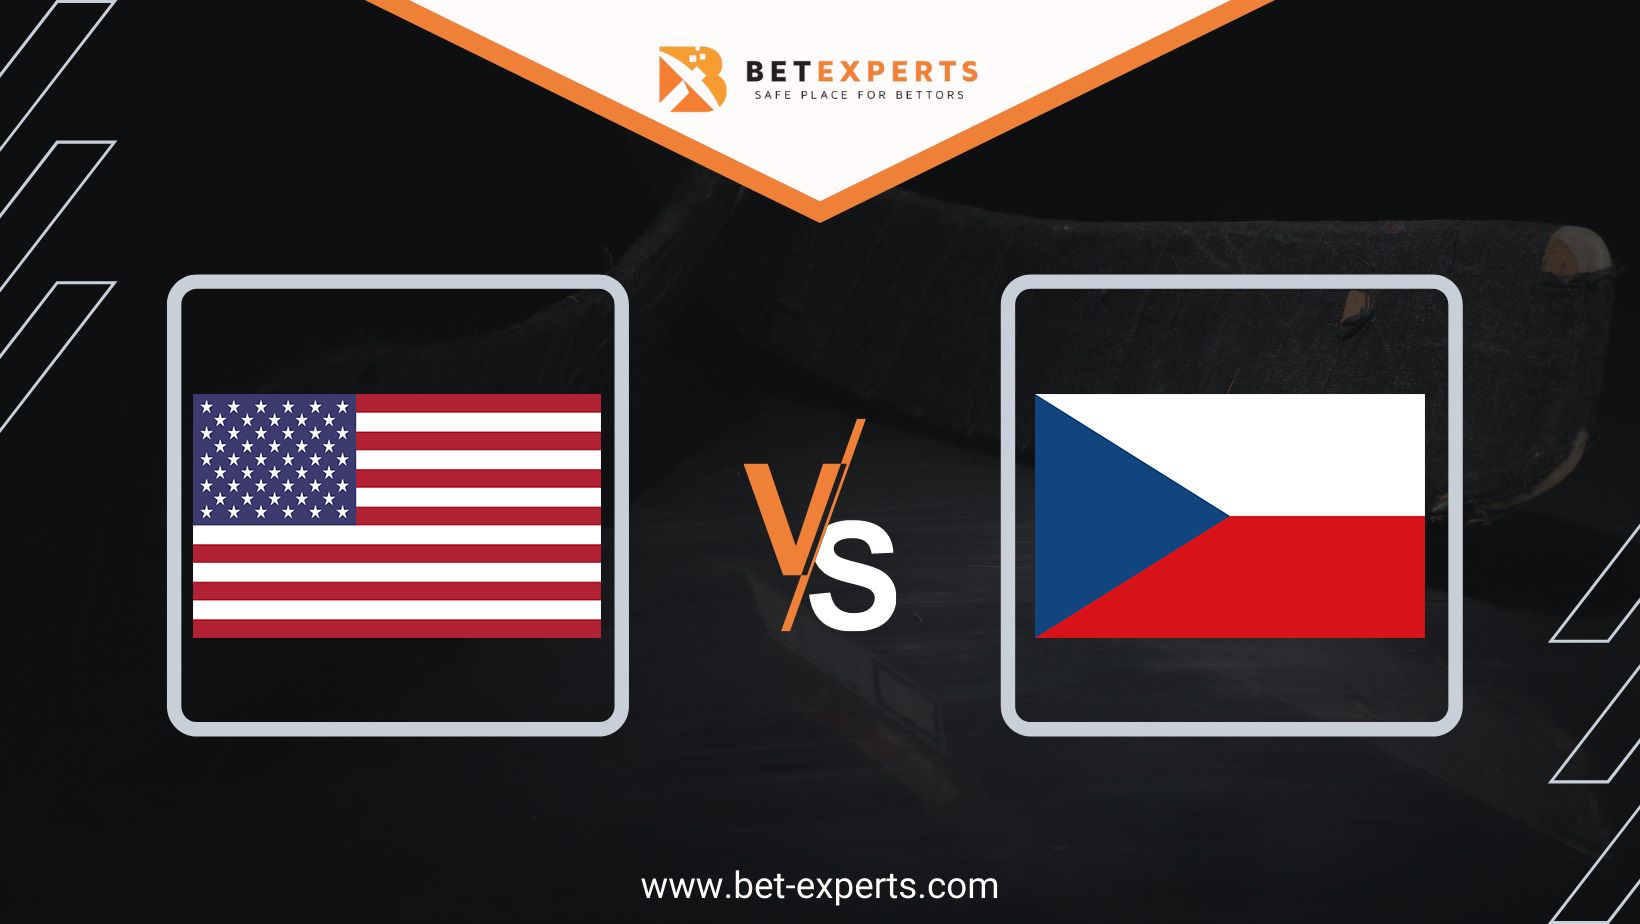 USA vs Czech Republic Prediction